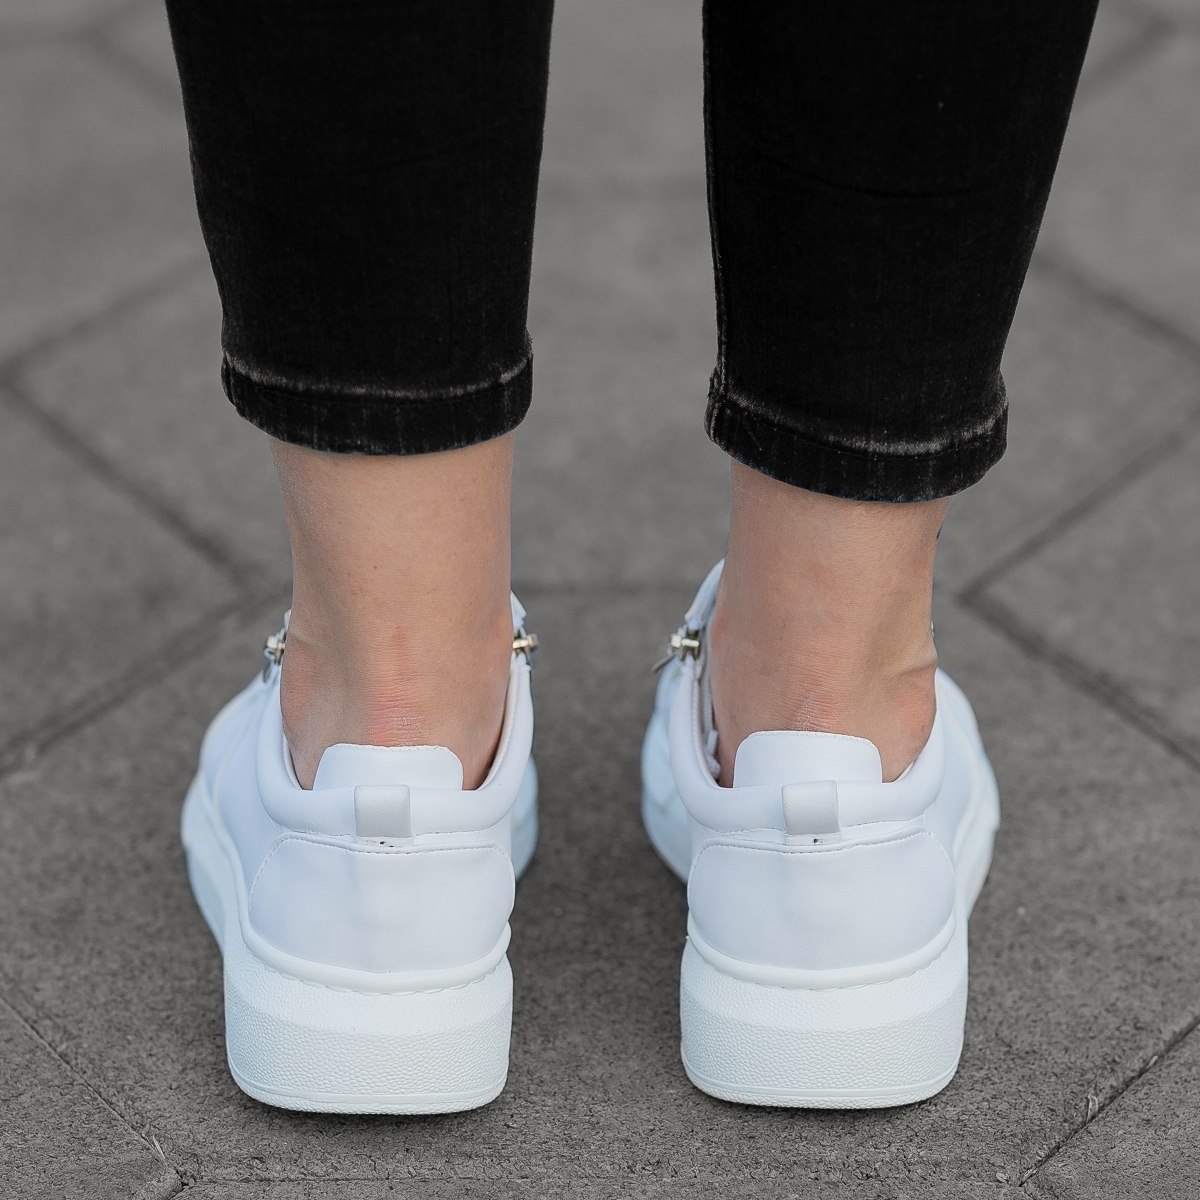 Women's Hype Sole Zipped Style Sneakers in White